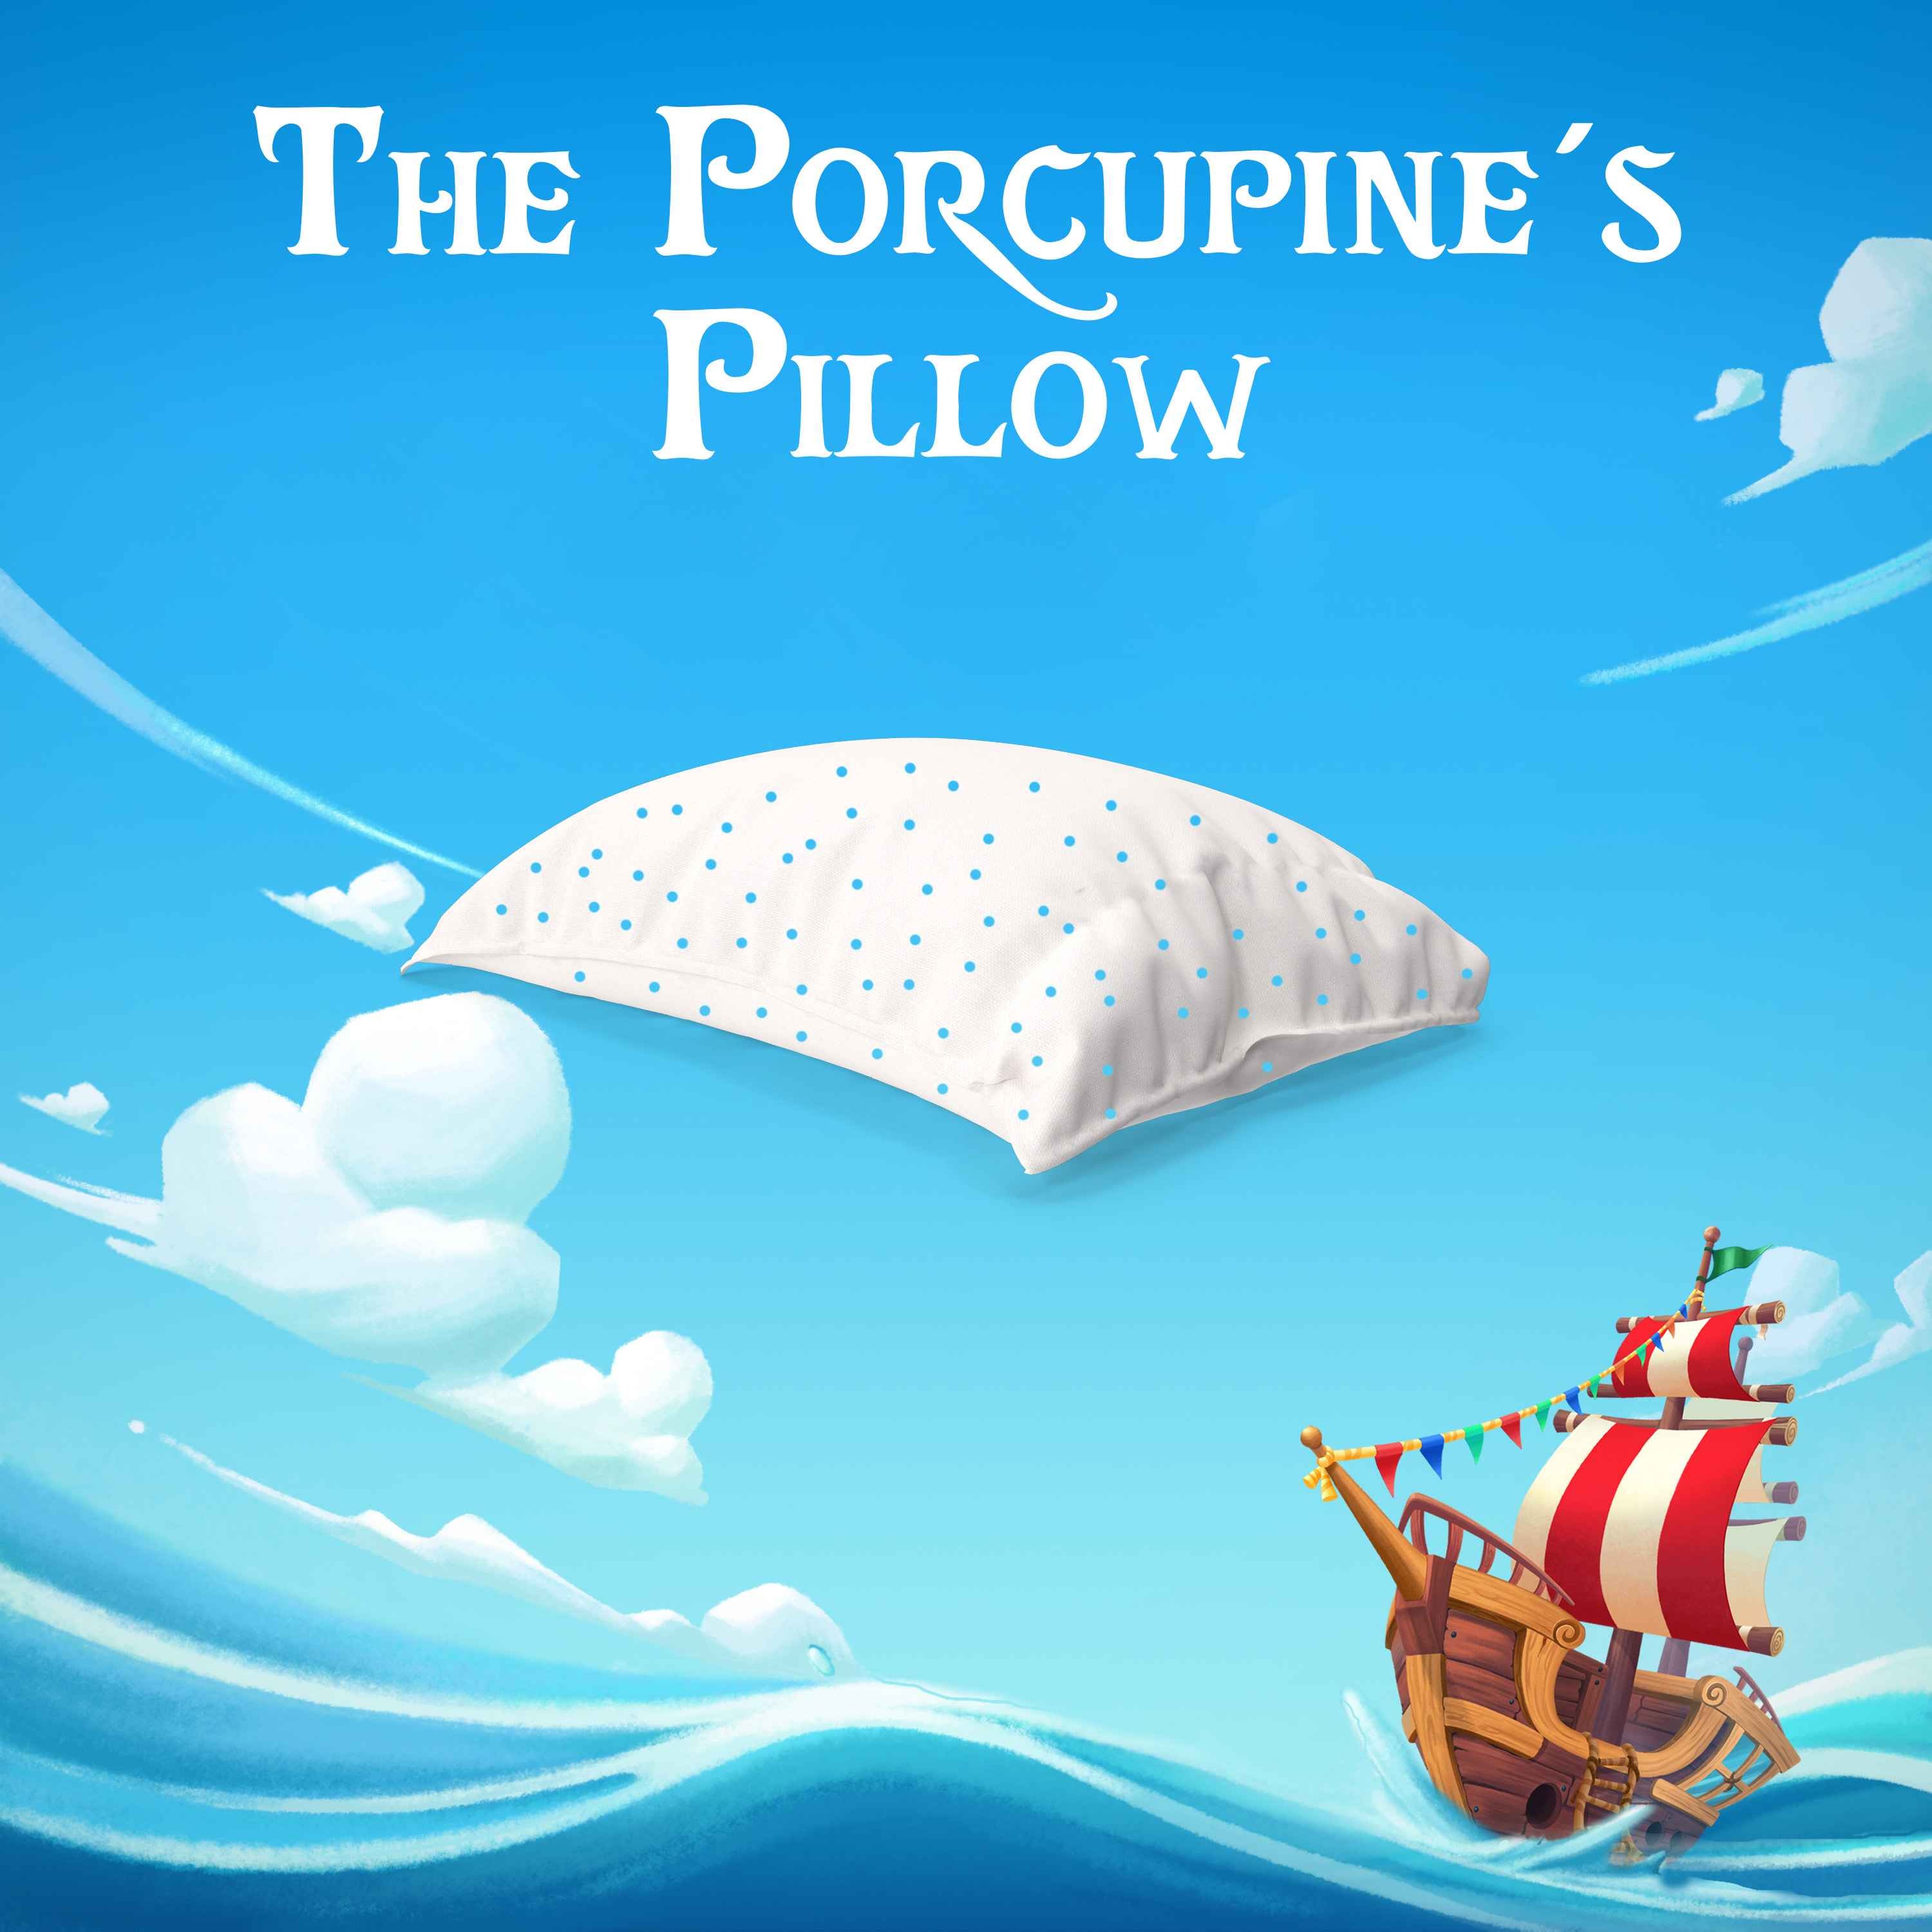 The Porcupine's Pillow